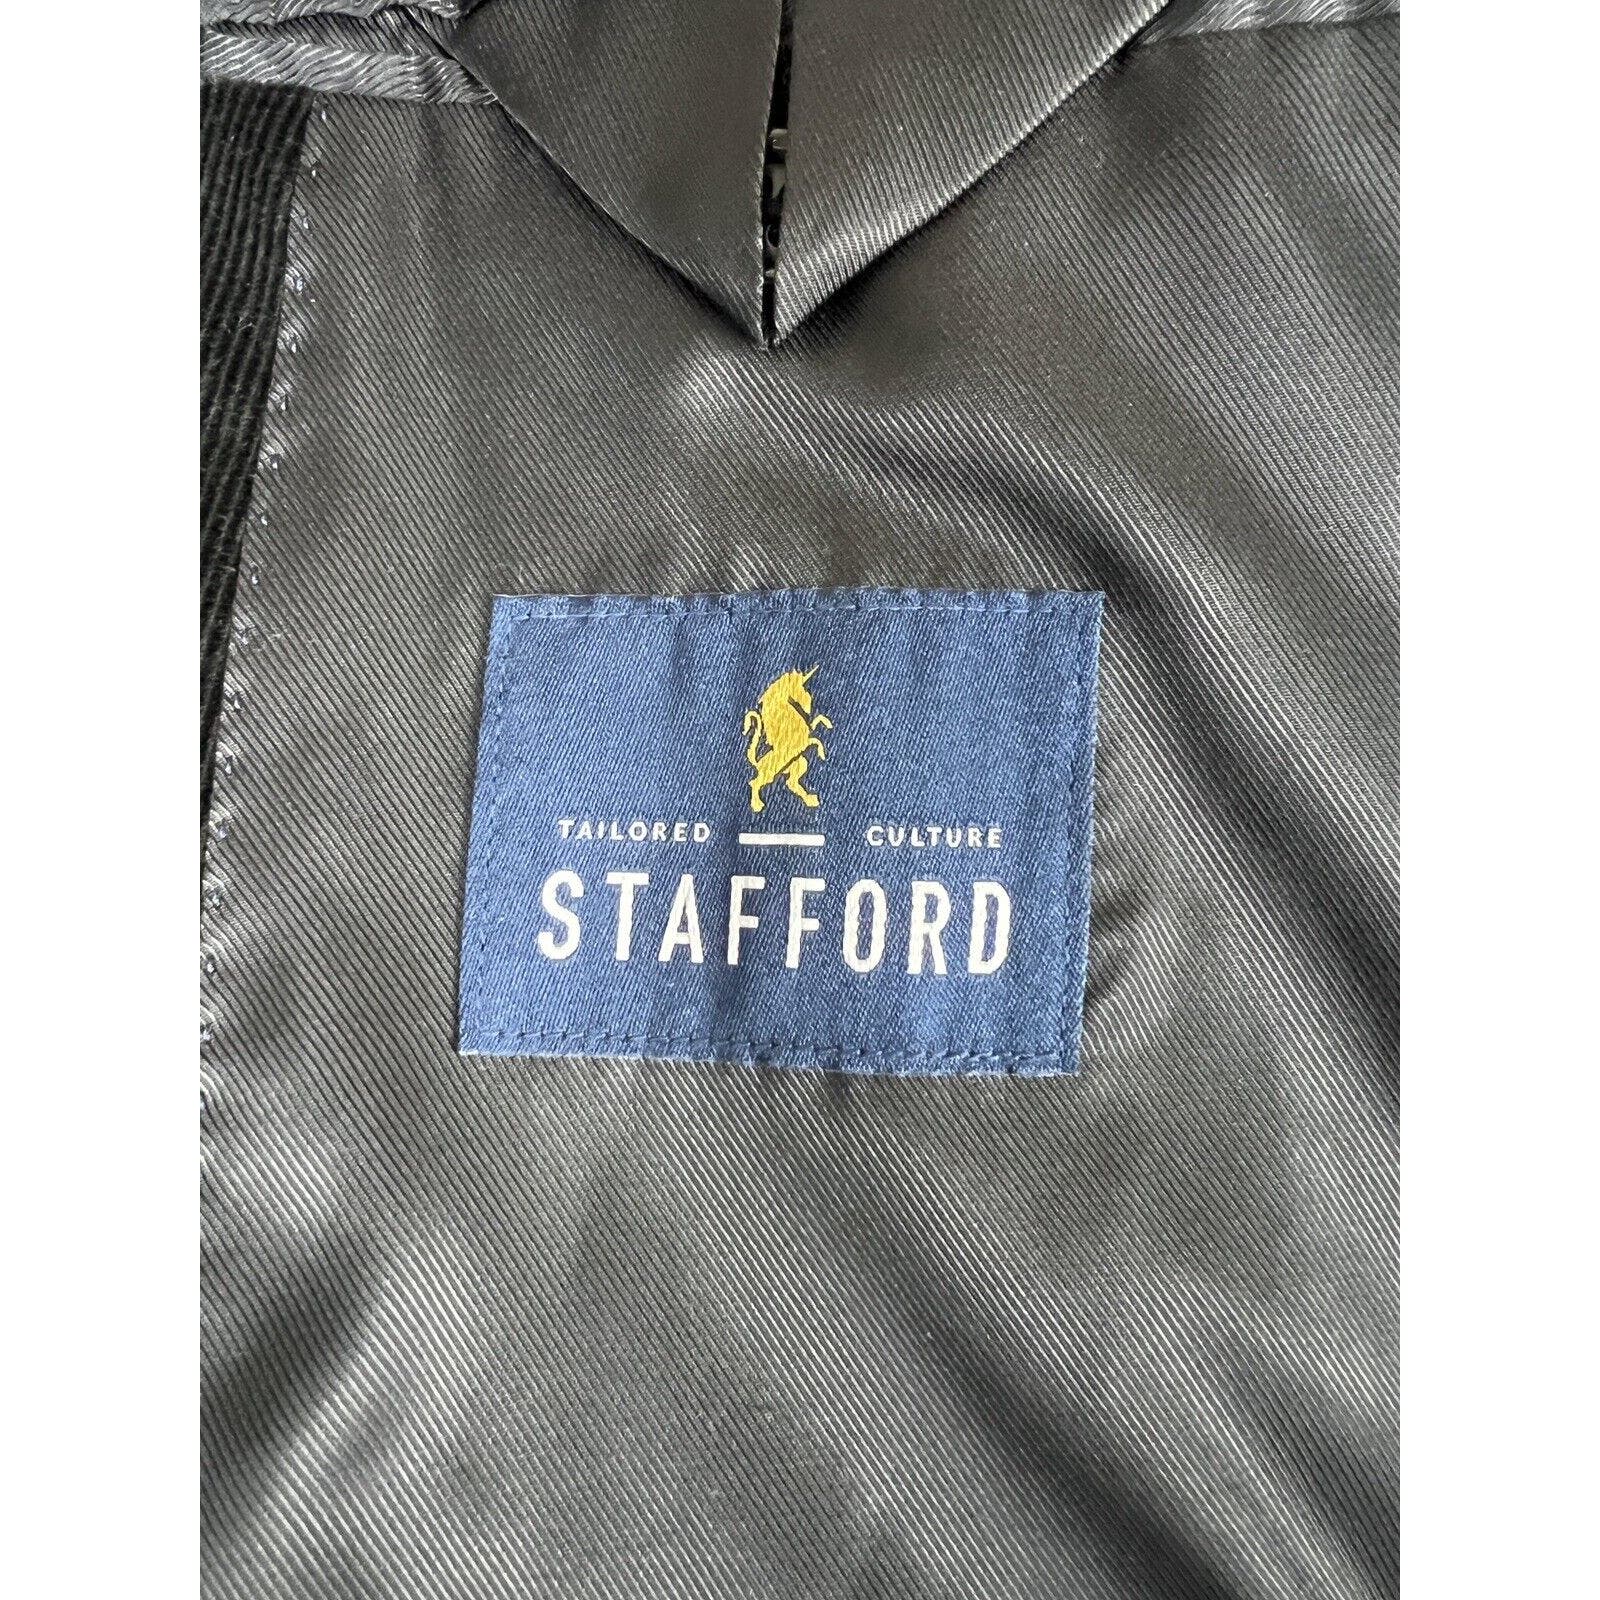 Stafford 2 Button Blazer Corduroy Mens 54R Sport Coat Jacket Classic Fit Black